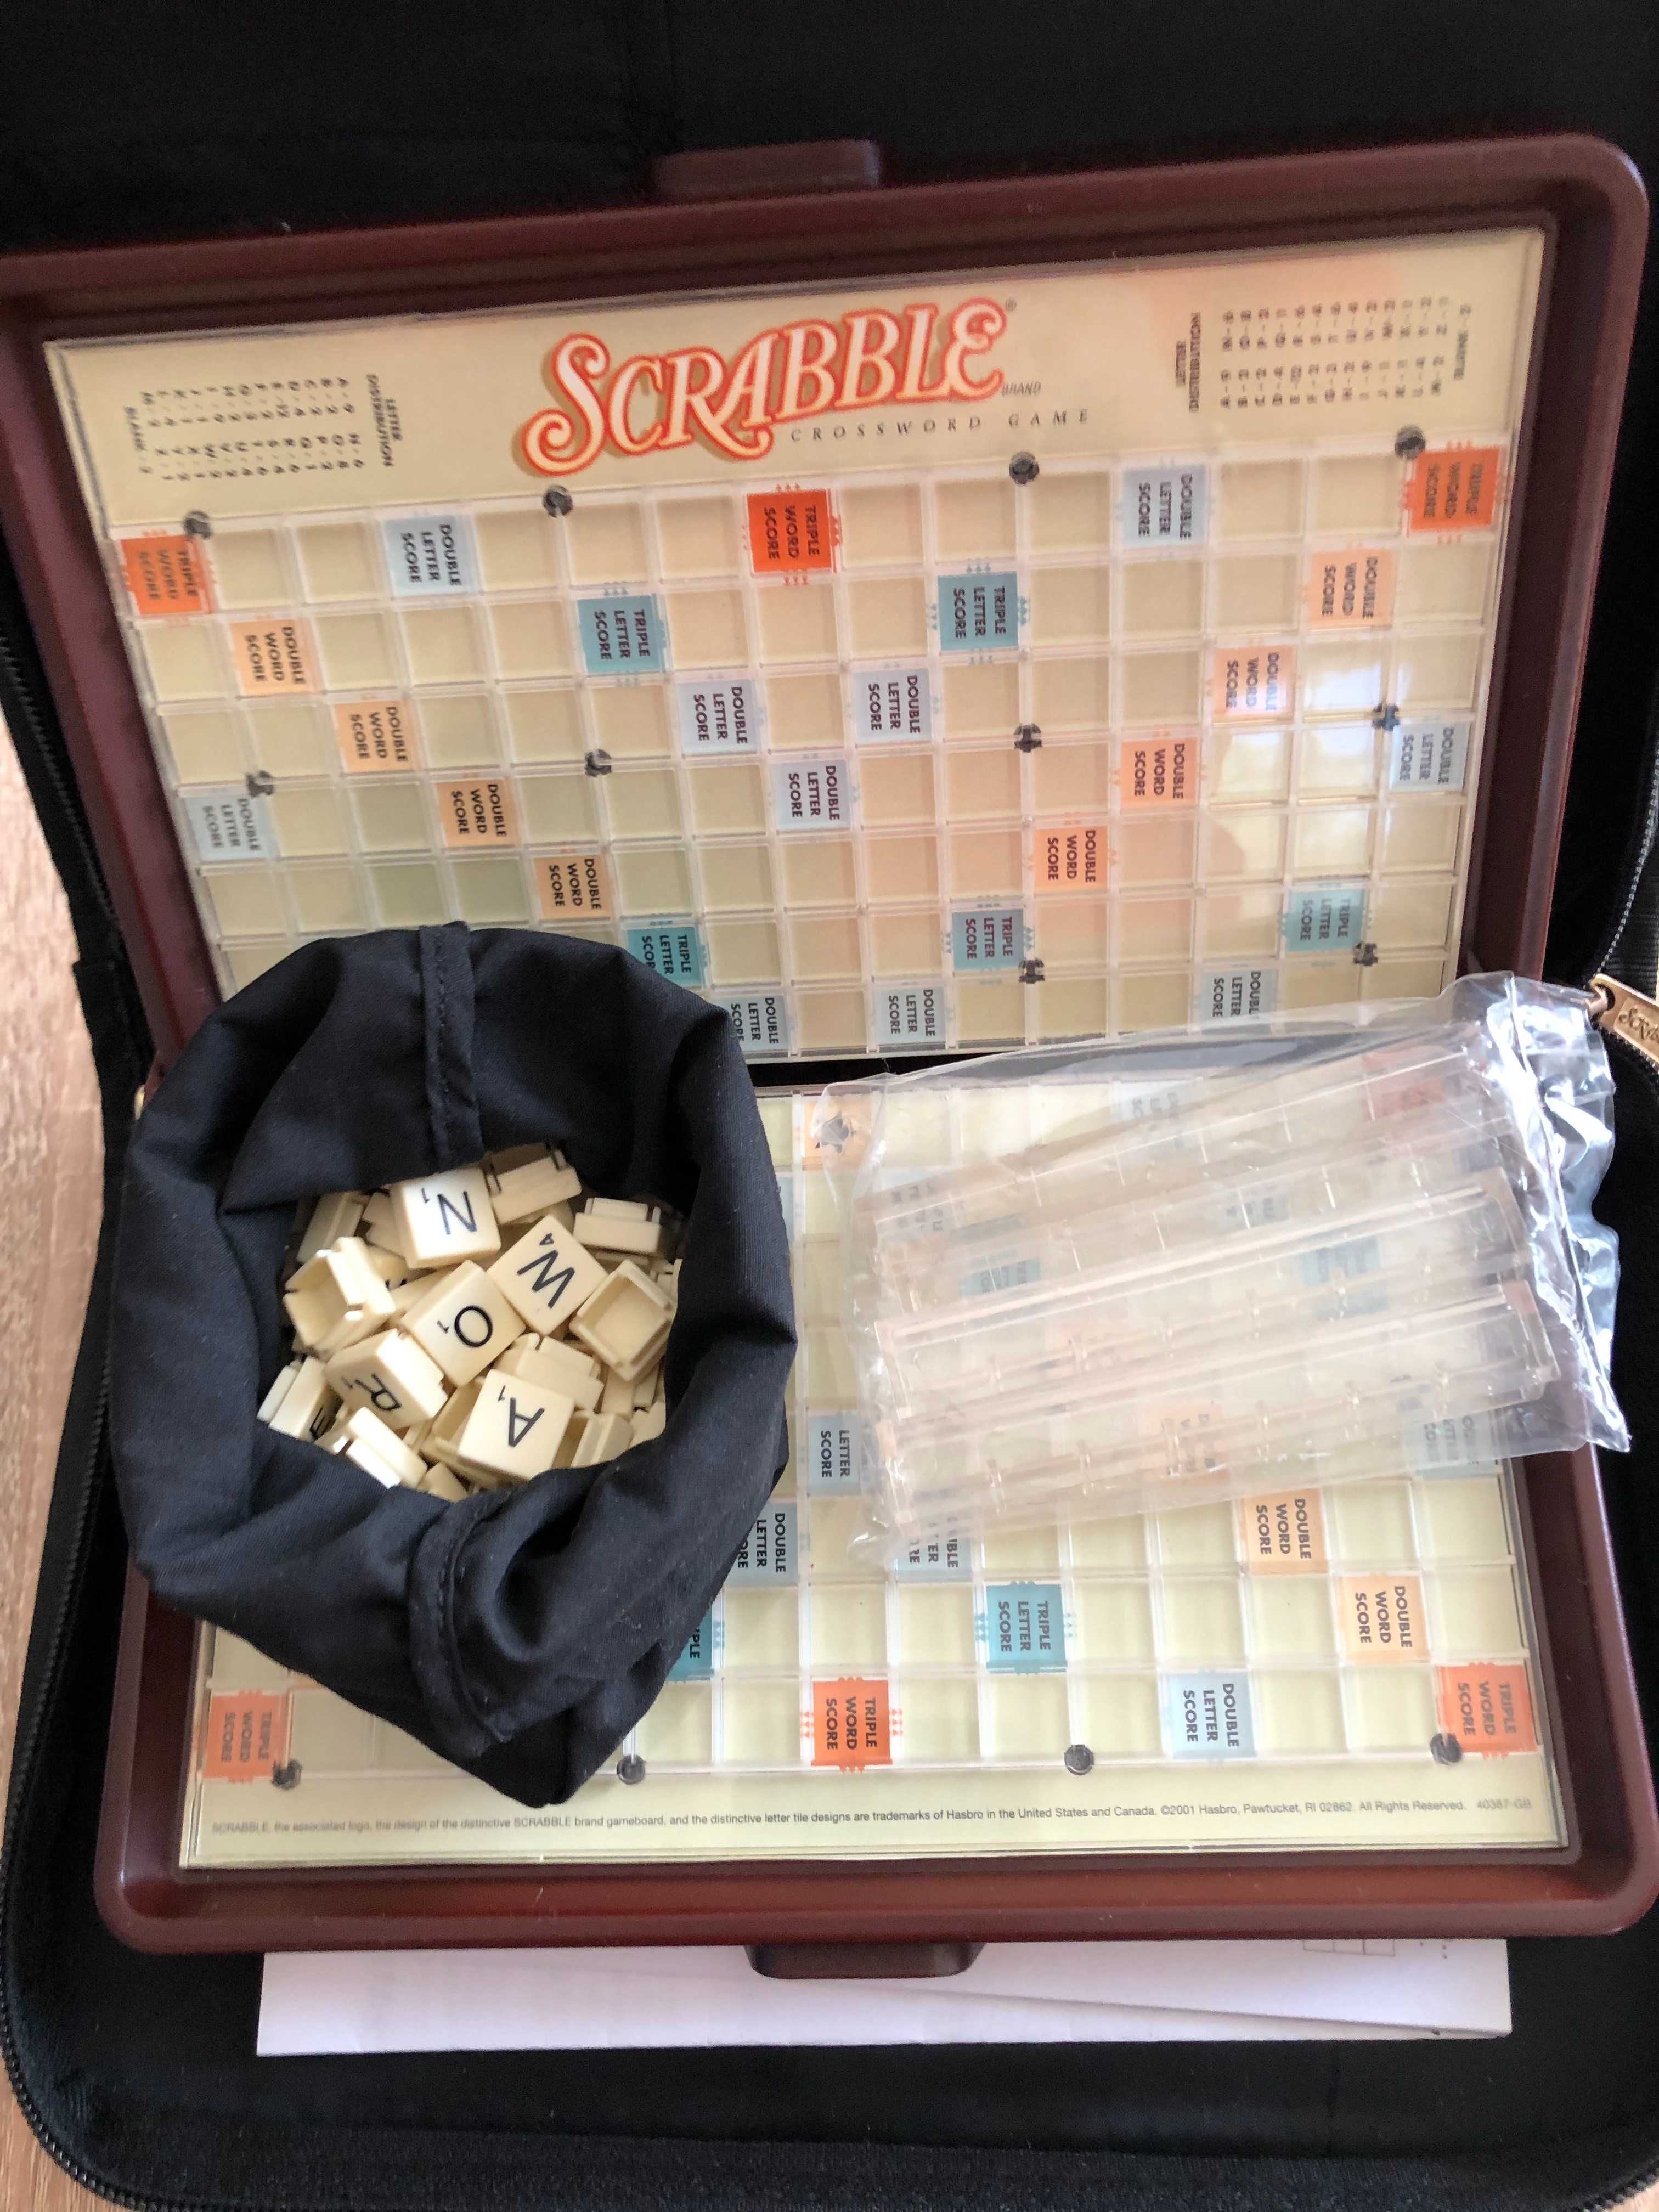 Scrabble гра оригінал США